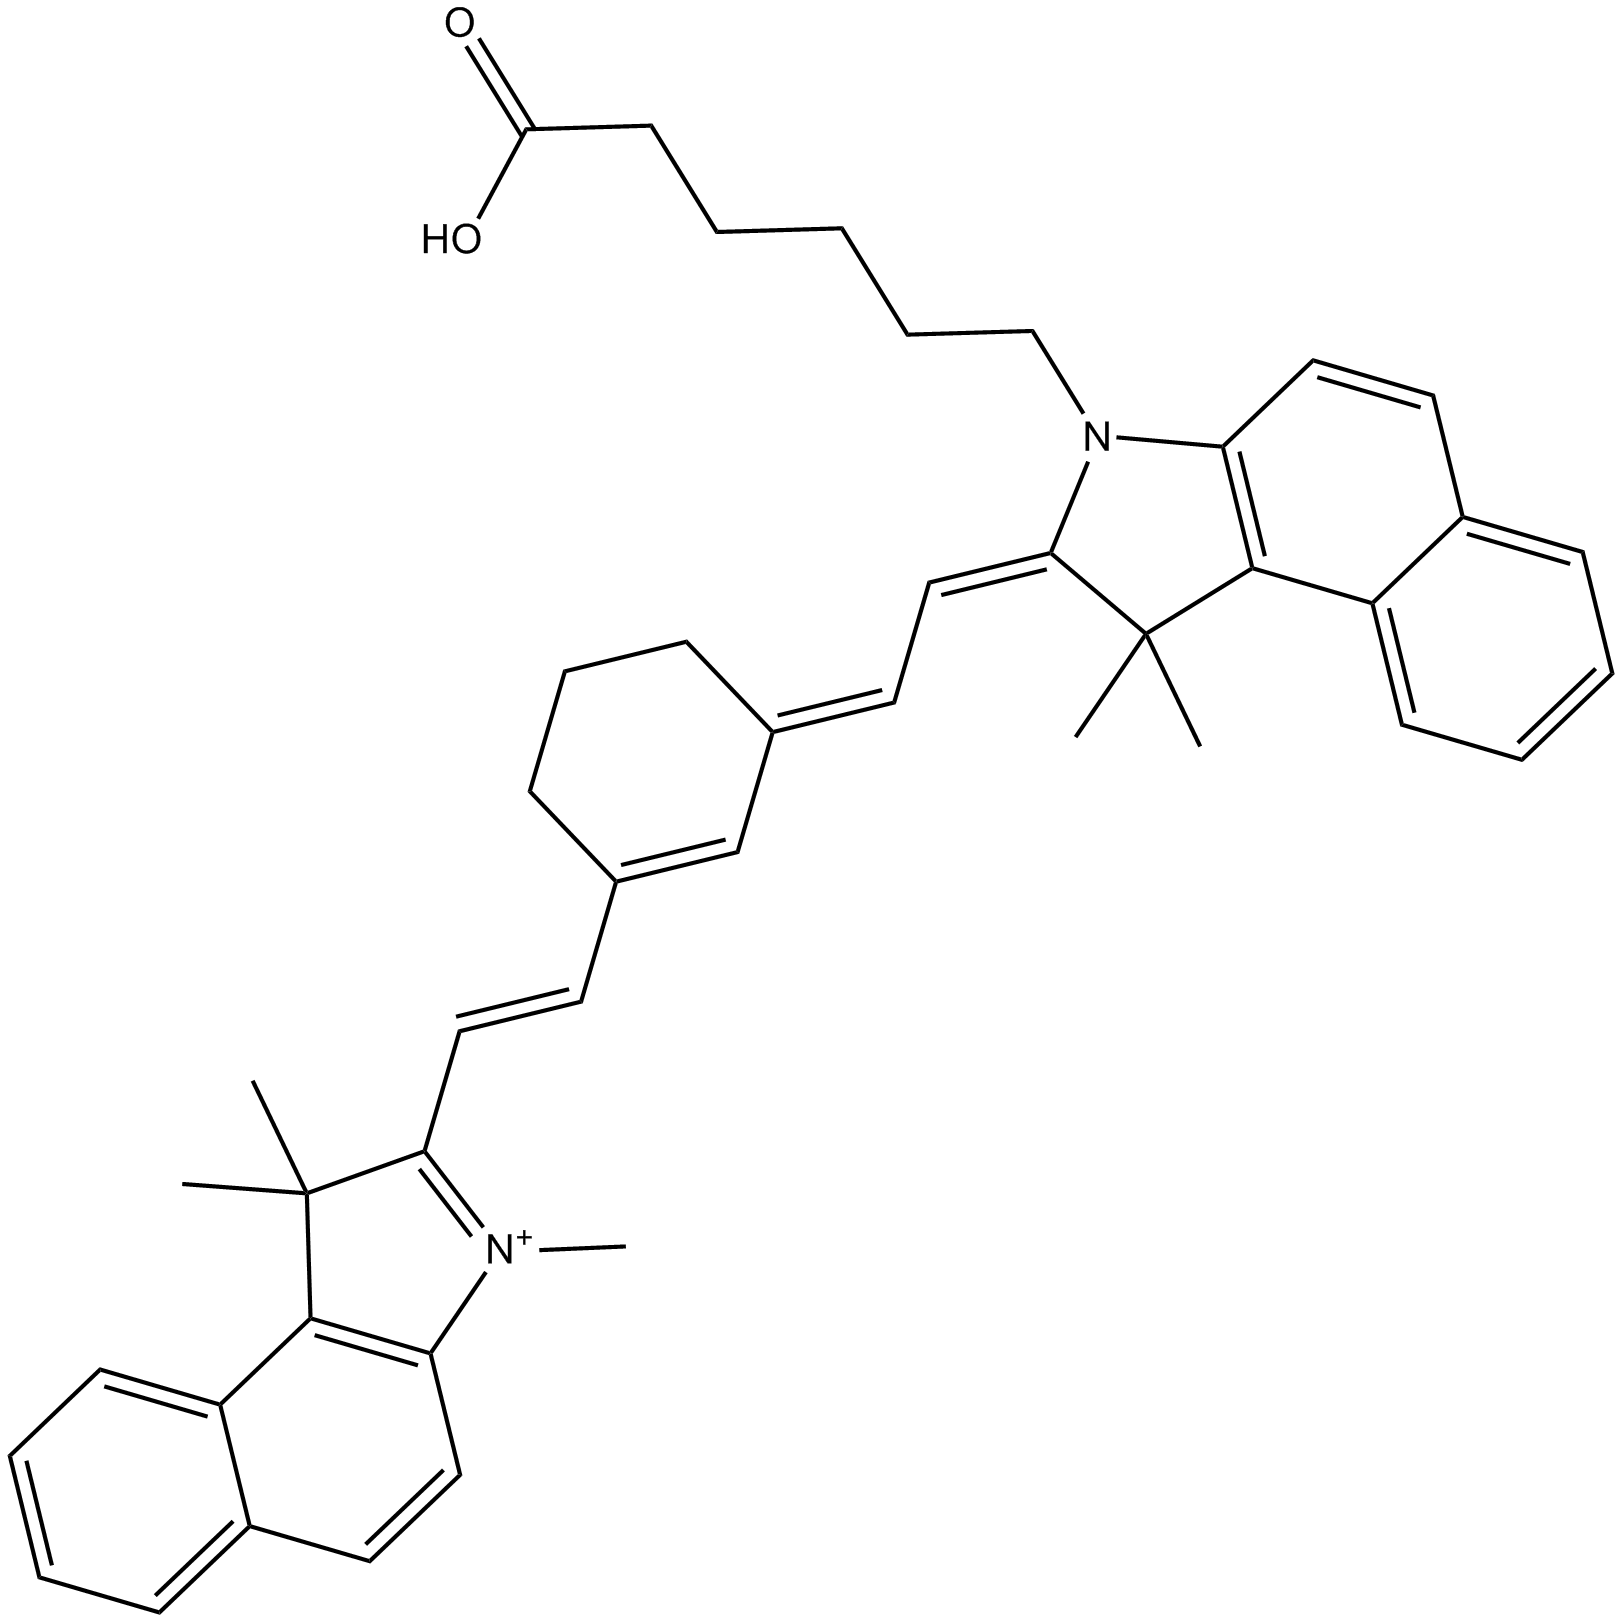 Cy7.5 carboxylic acid (non-sulfonated) Chemische Struktur